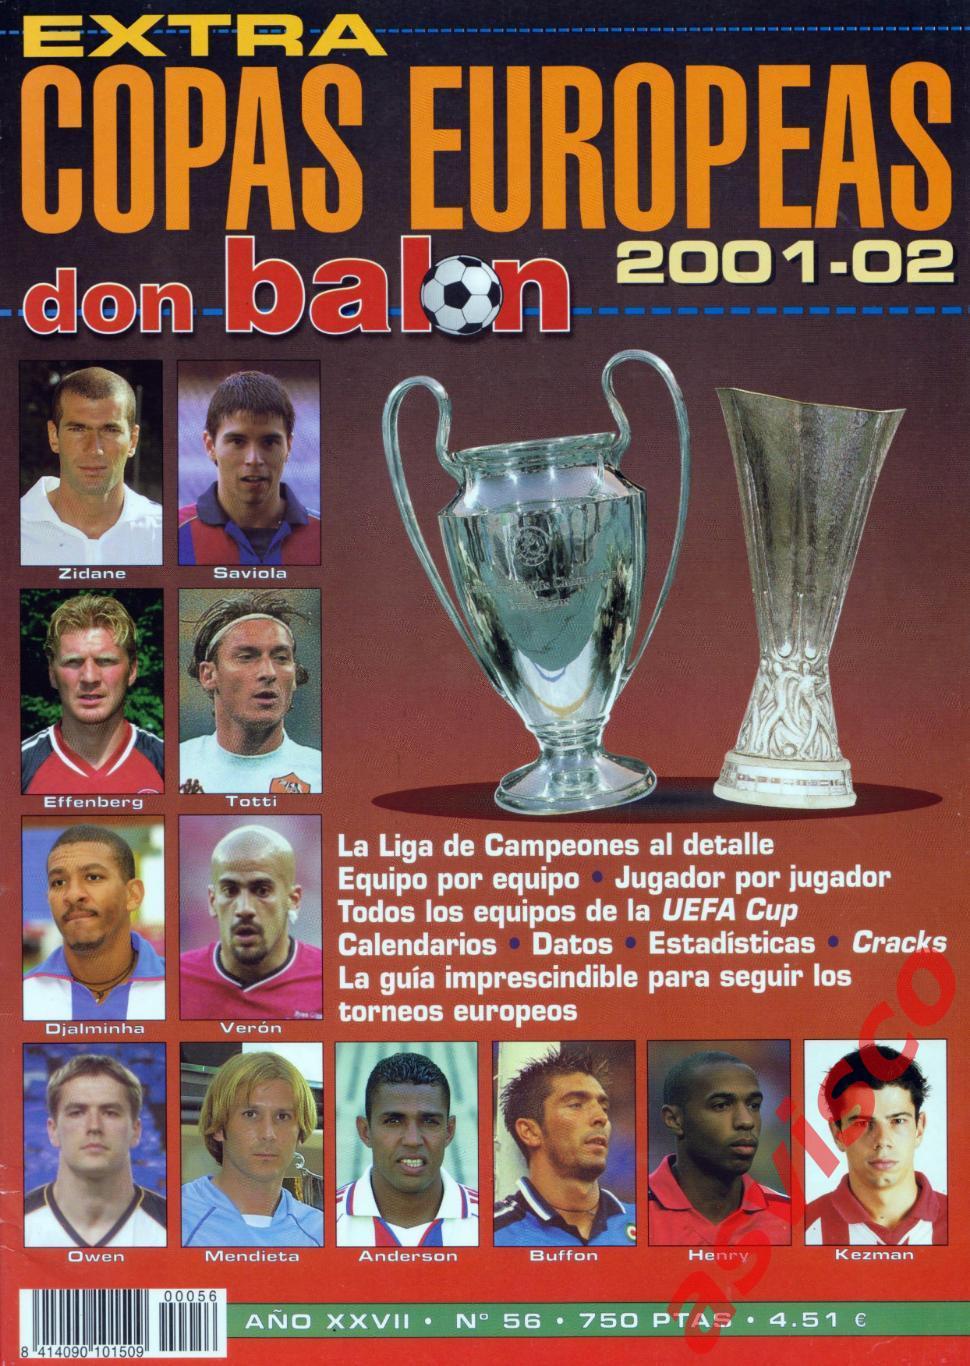 Европейские Кубки по футболу. Сезон 2001-2002 годов. Представление команд.